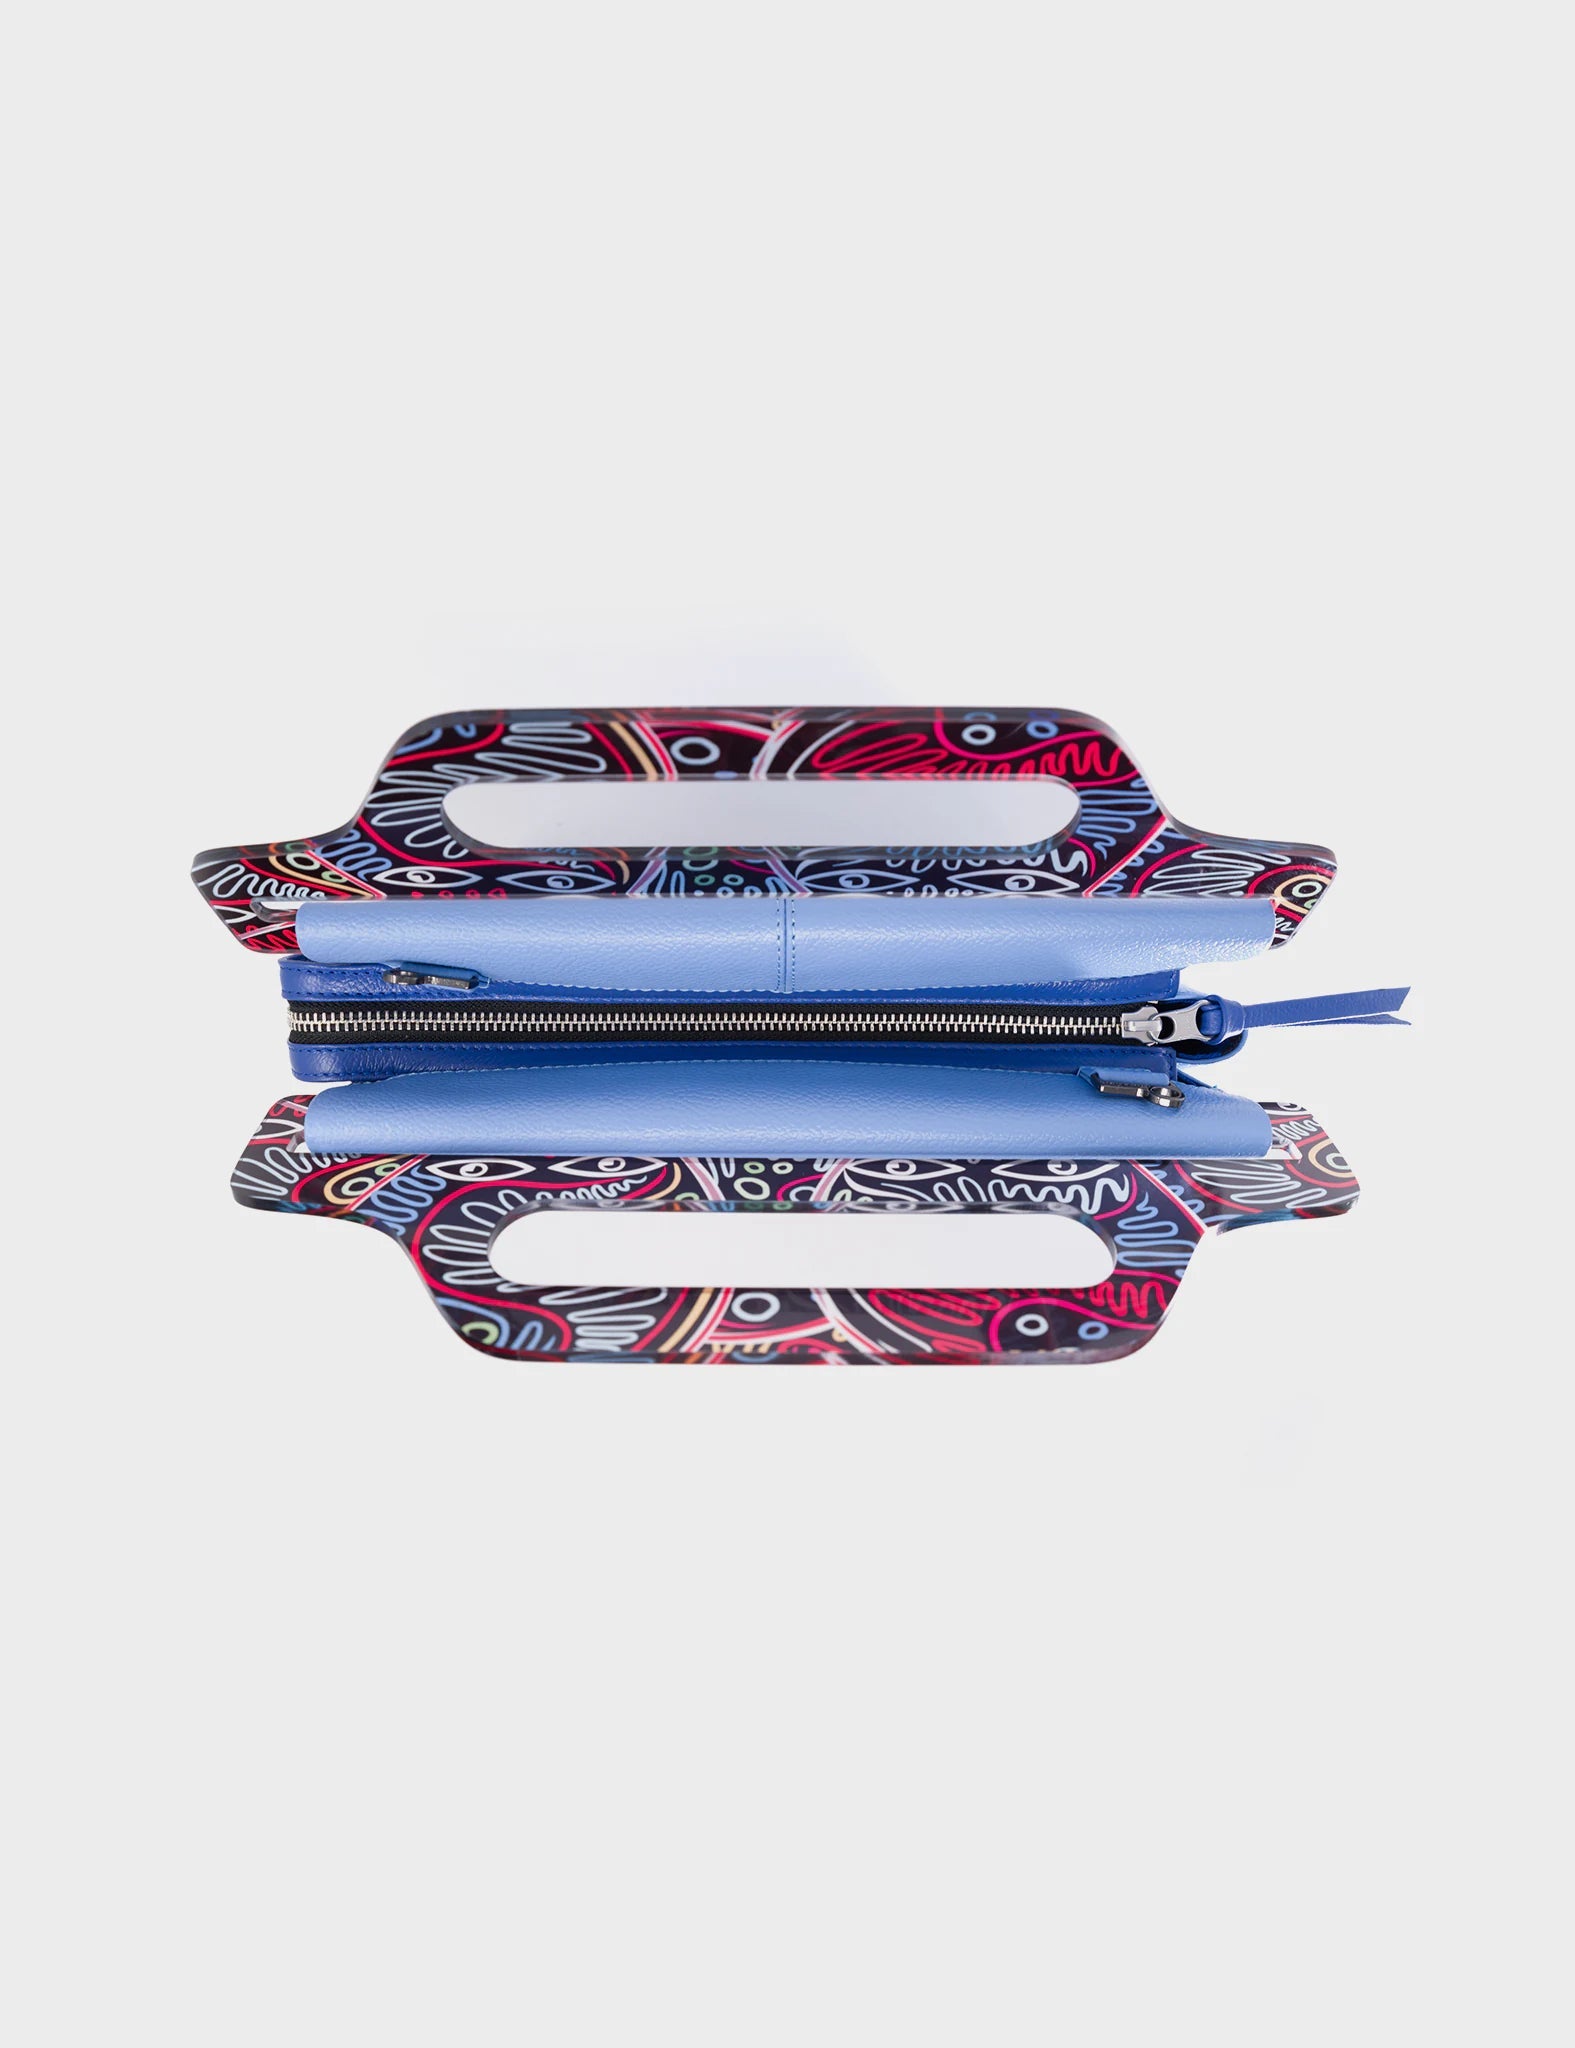 Crossbody Blue Leather Handbag Multicolored Octopus Design - Top 